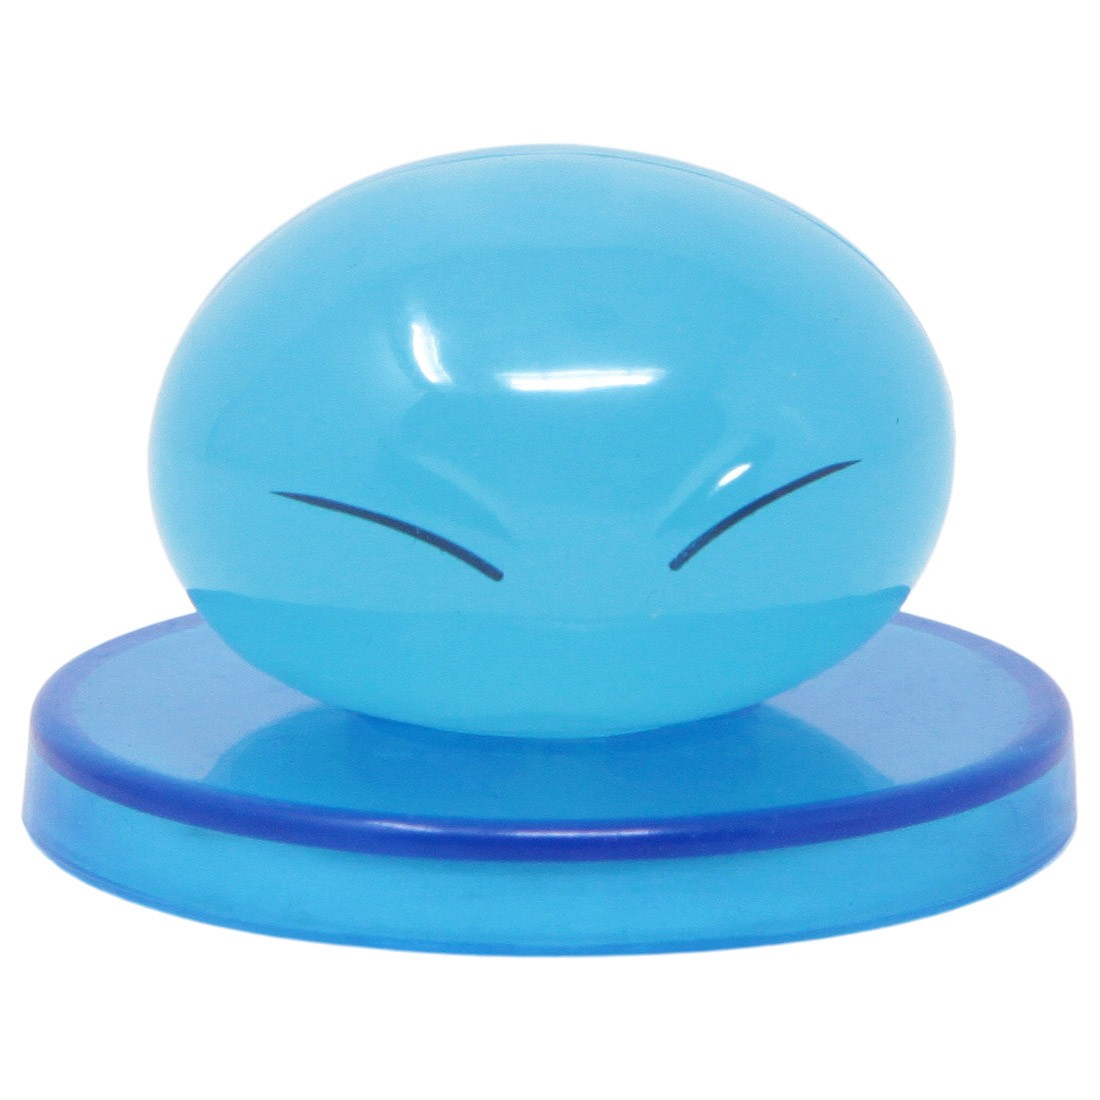 Banpresto That Time I Got Reincarnated As A Slime World Collectable Figure Vol.1 - E Rimuru Tempest Slime (blue)